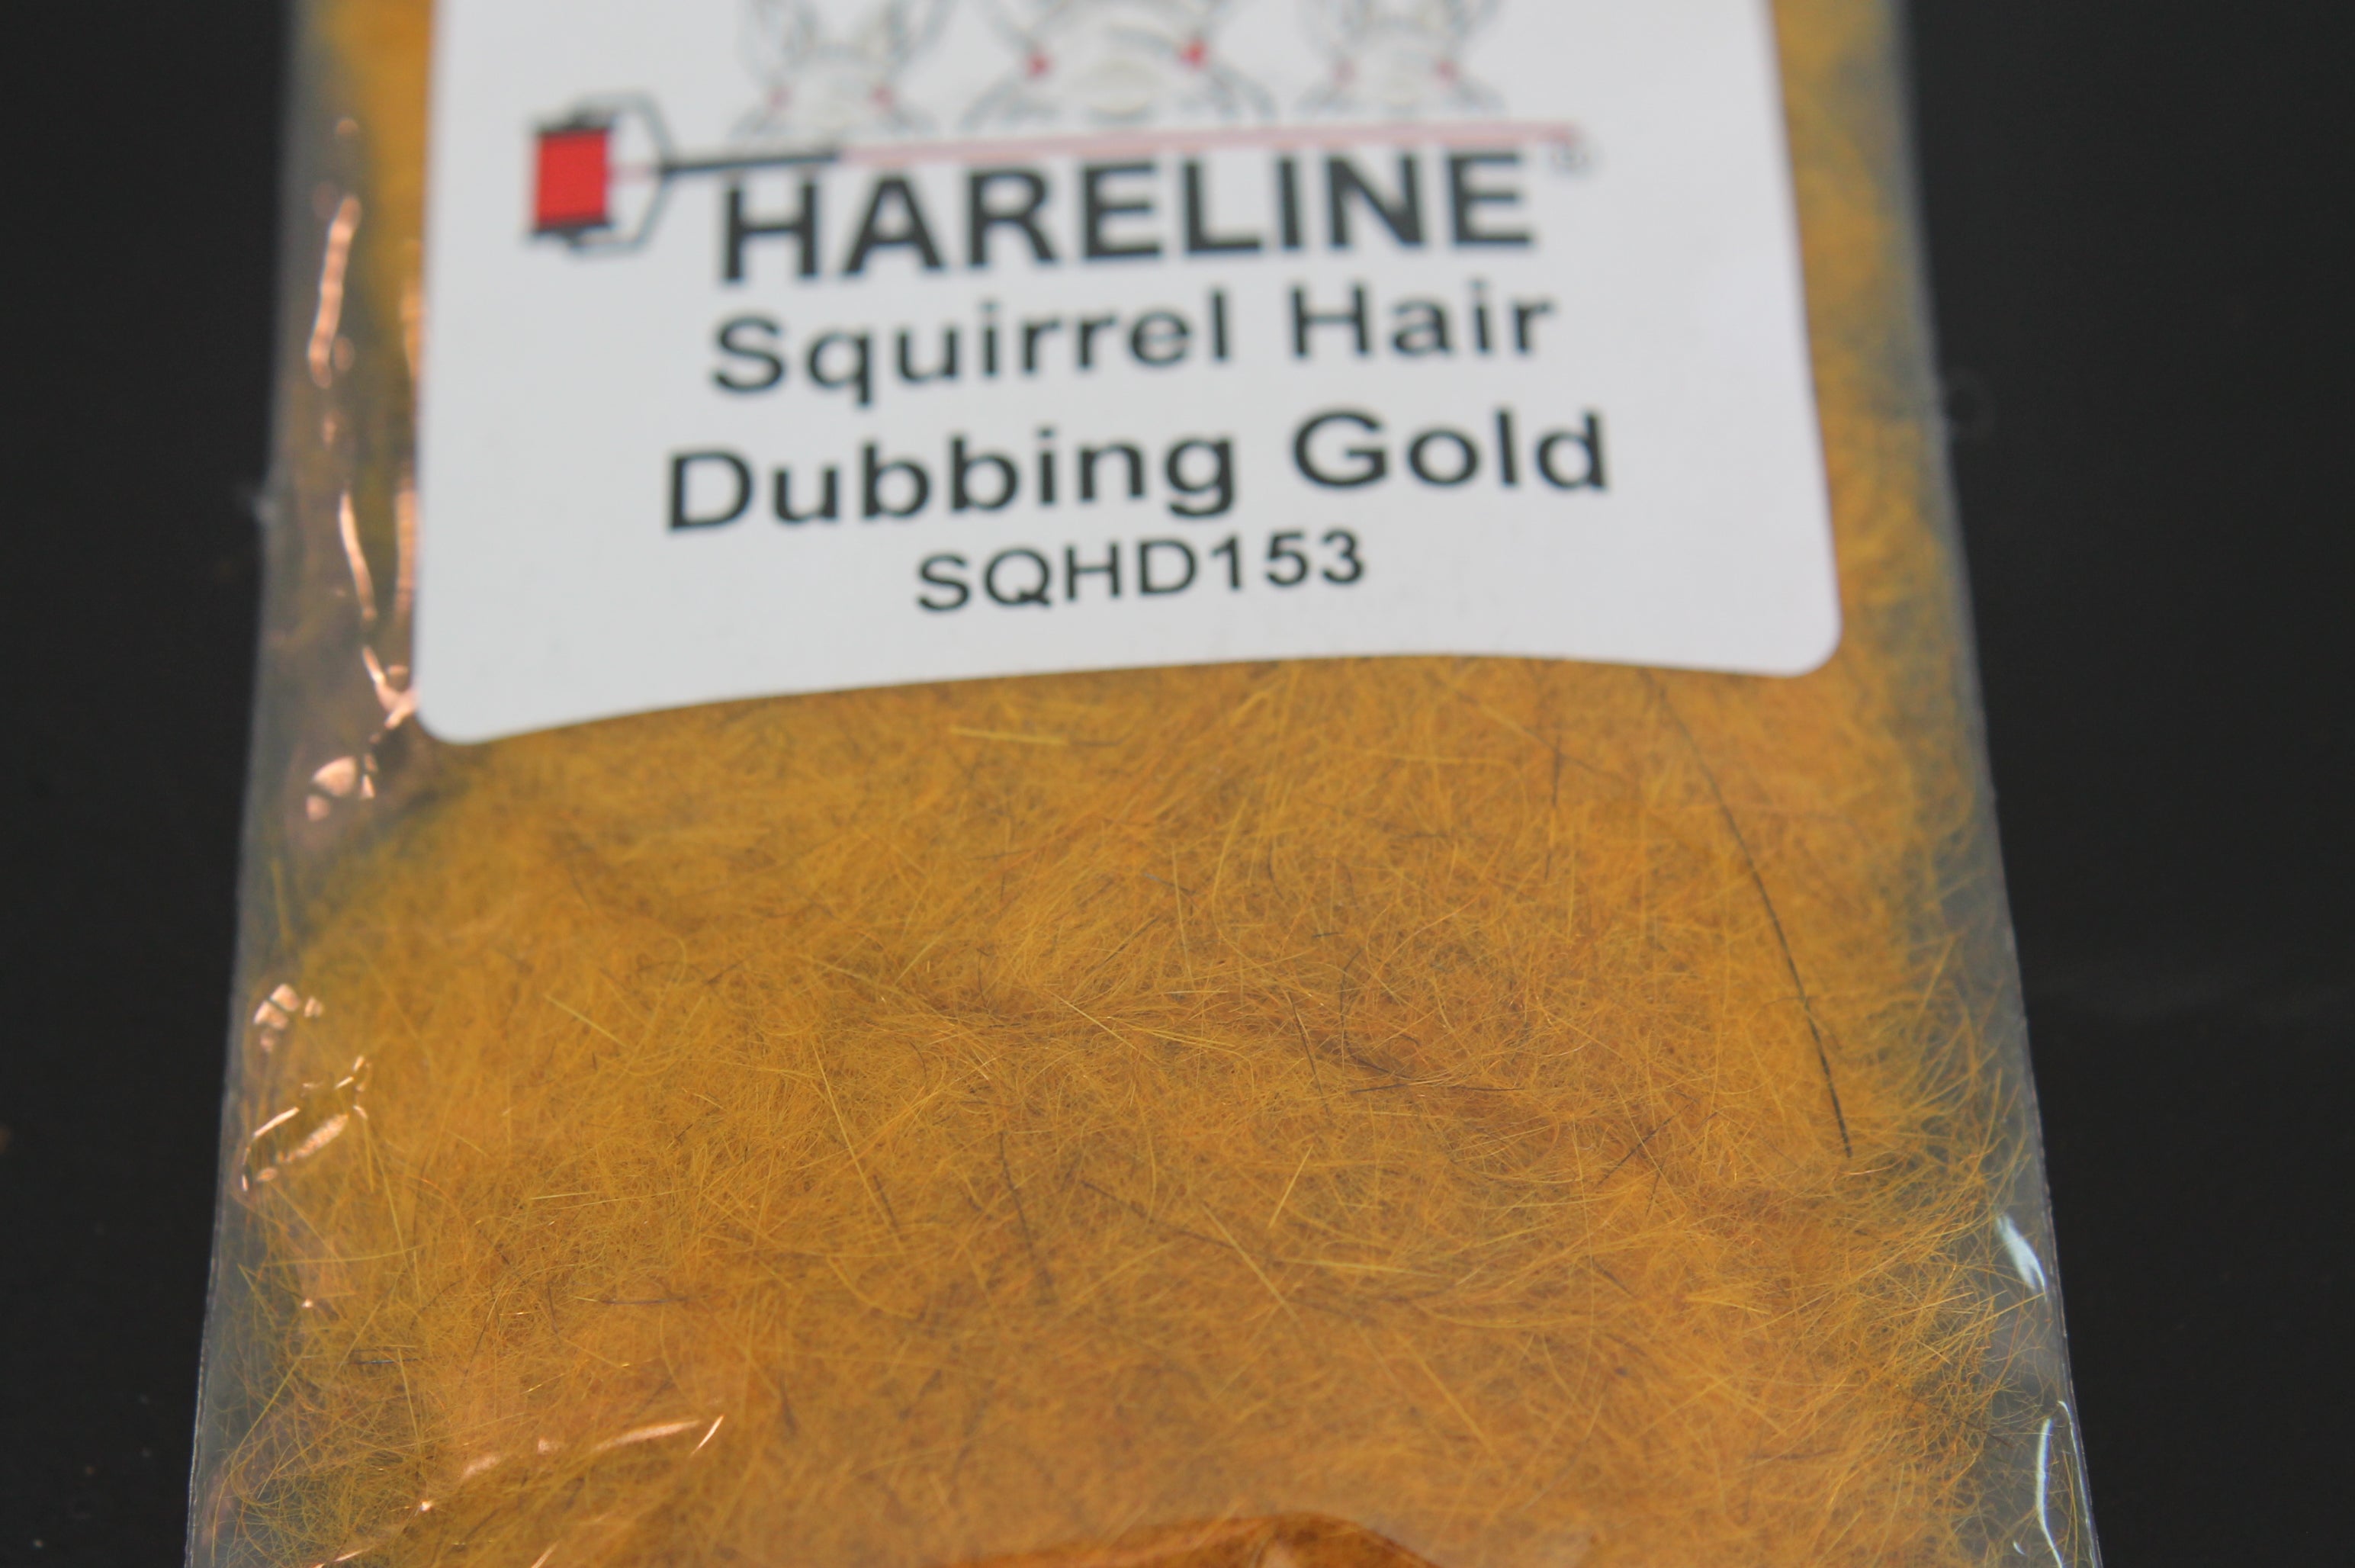 Squirrel Hair Dubbing